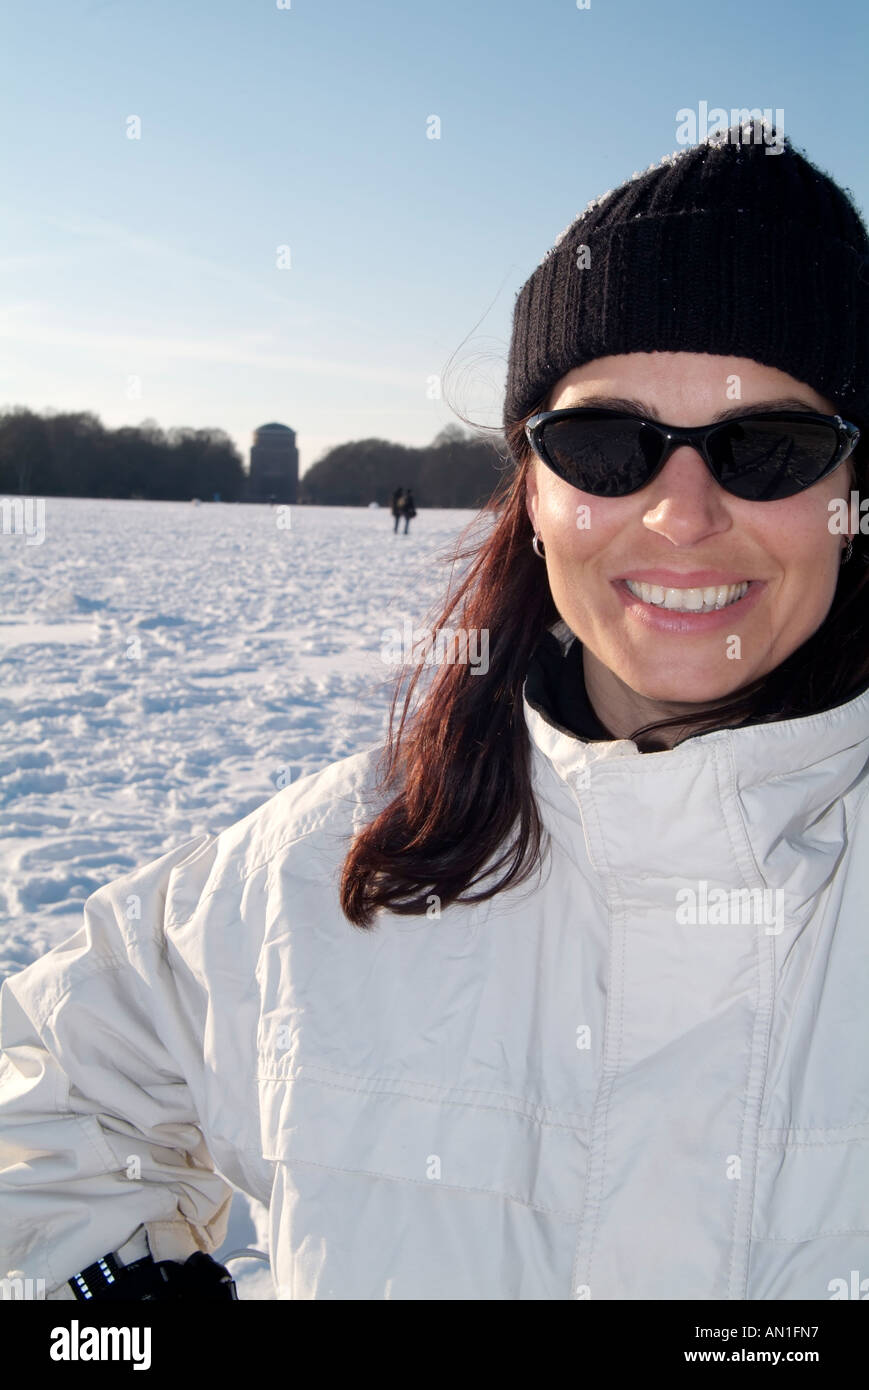 young woman enjoying snow in hamburg - Germany, fun, snowy, Lifestyle Stock Photo